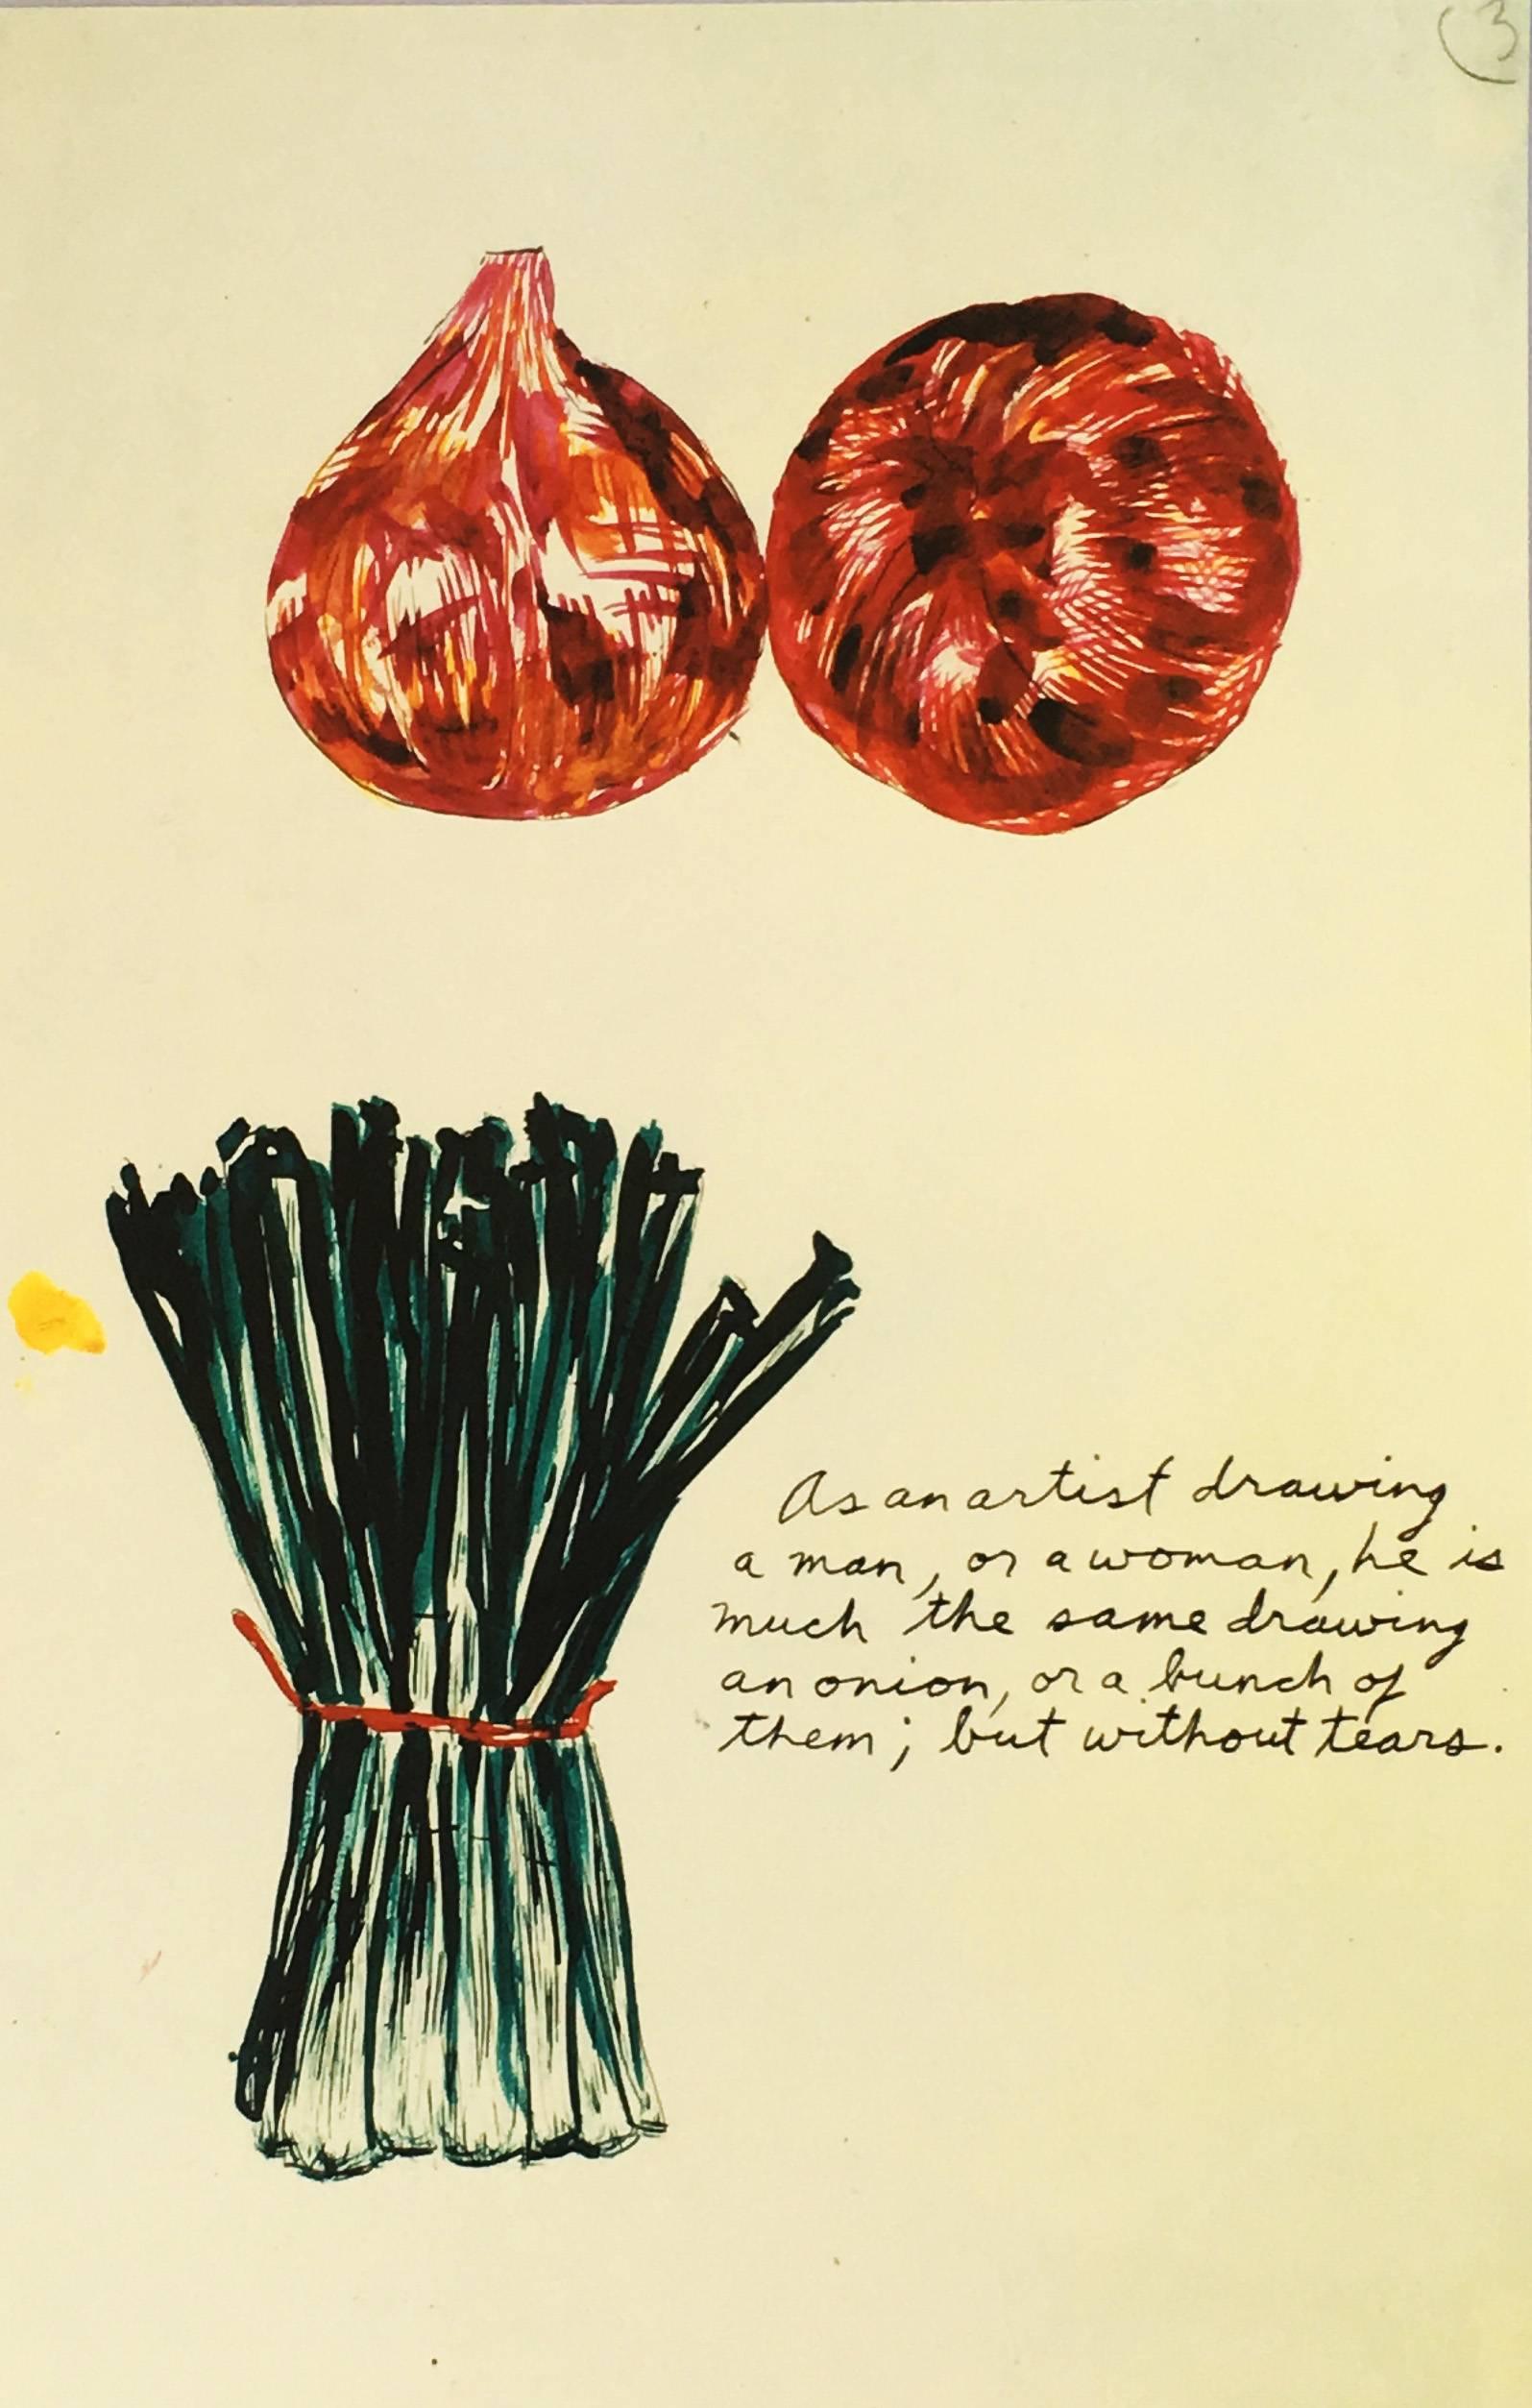 Raymond Pettibon (untitled) 'Illustration Without Tears' (set of 3 posters)  1